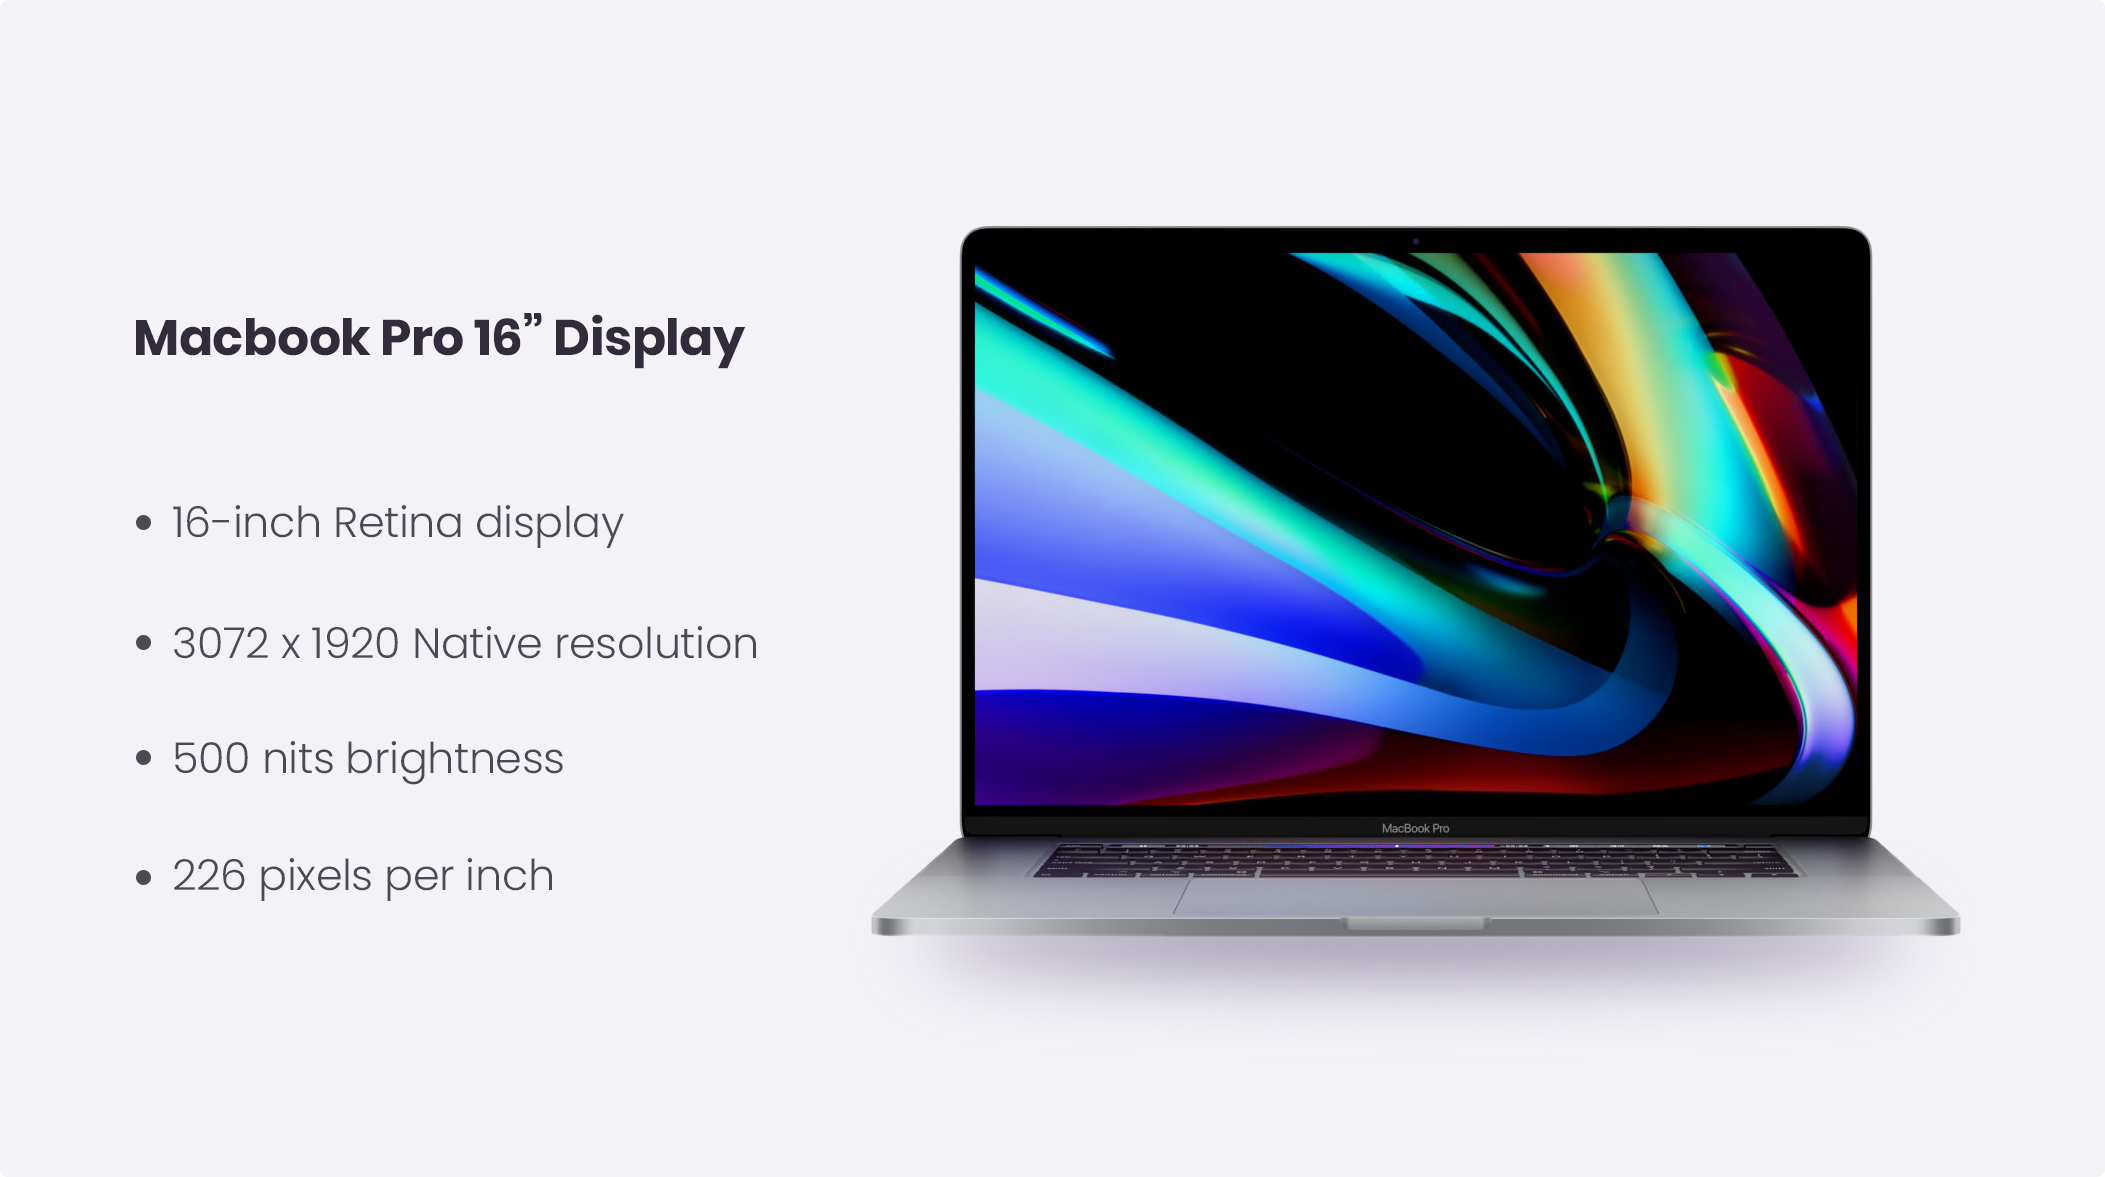 macbook pro 2020 display specifications